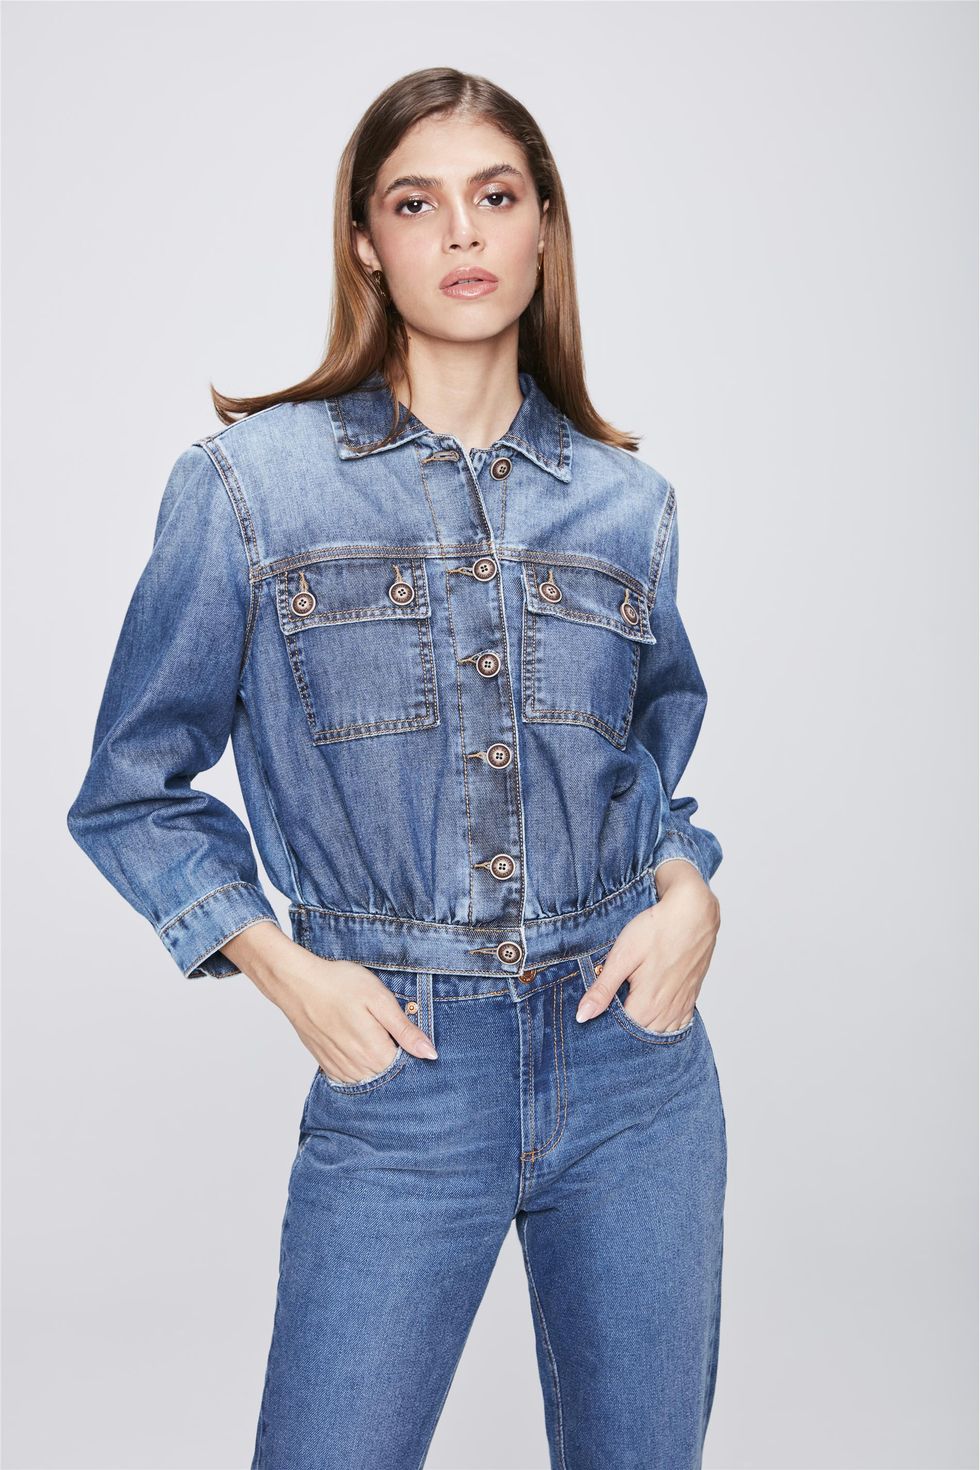 jaqueta jeans regata feminina